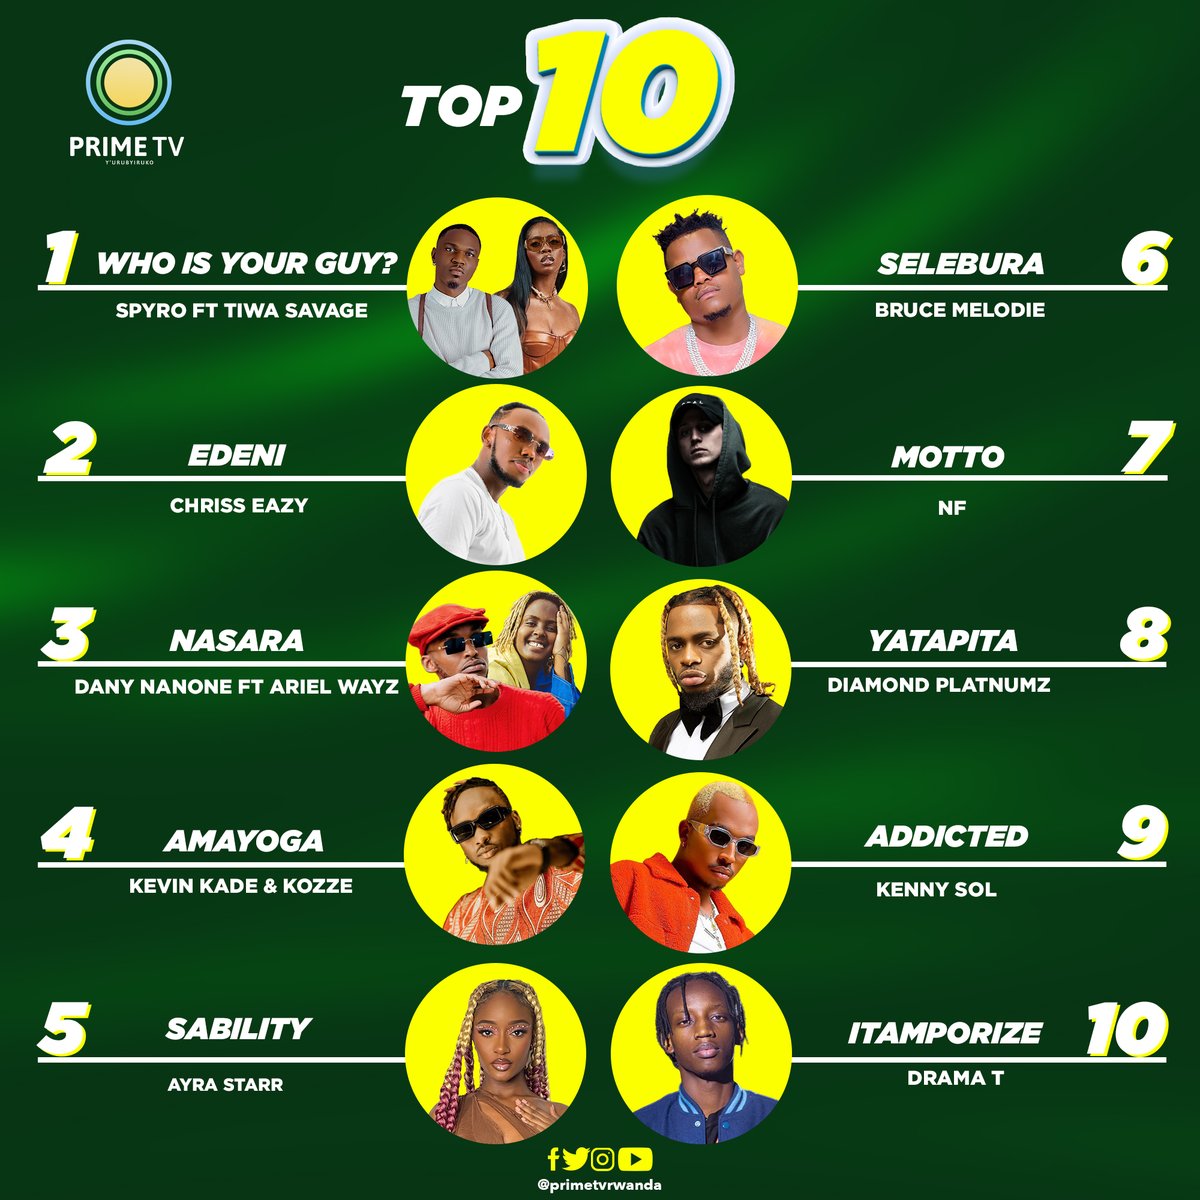 Watch your favourite #TOP10 songs on @primetvrwanda everyday at 1:00 pm #primetvtop10 #youthempowerment